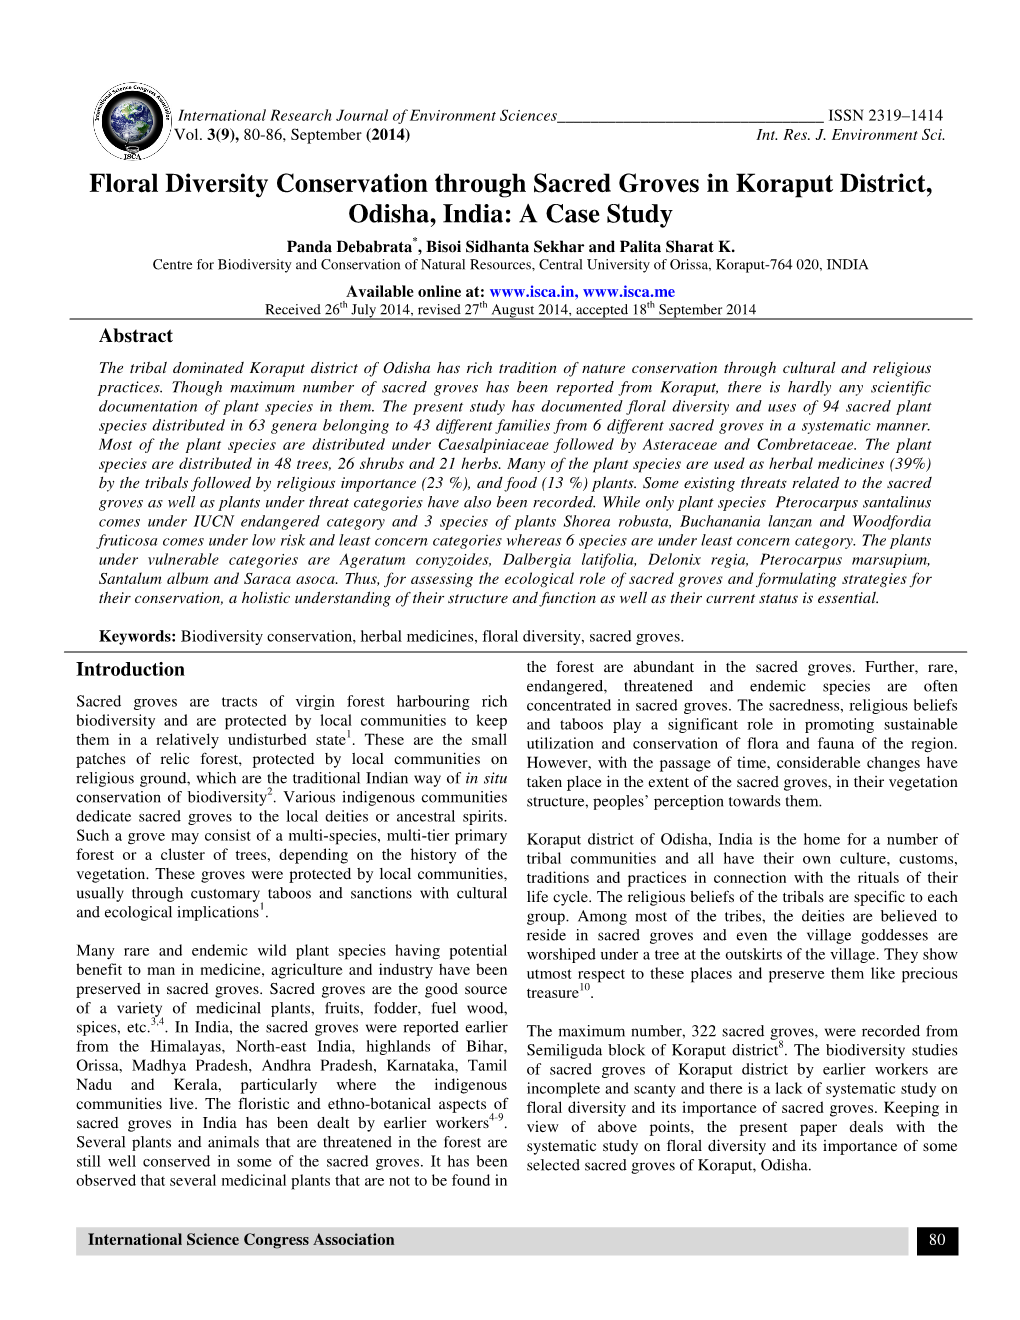 Floral Diversity Conservation Through Sacred Groves in Koraput District, Odisha, India: a Case Study Panda Debabrata *, Bisoi Sidhanta Sekhar and Palita Sharat K